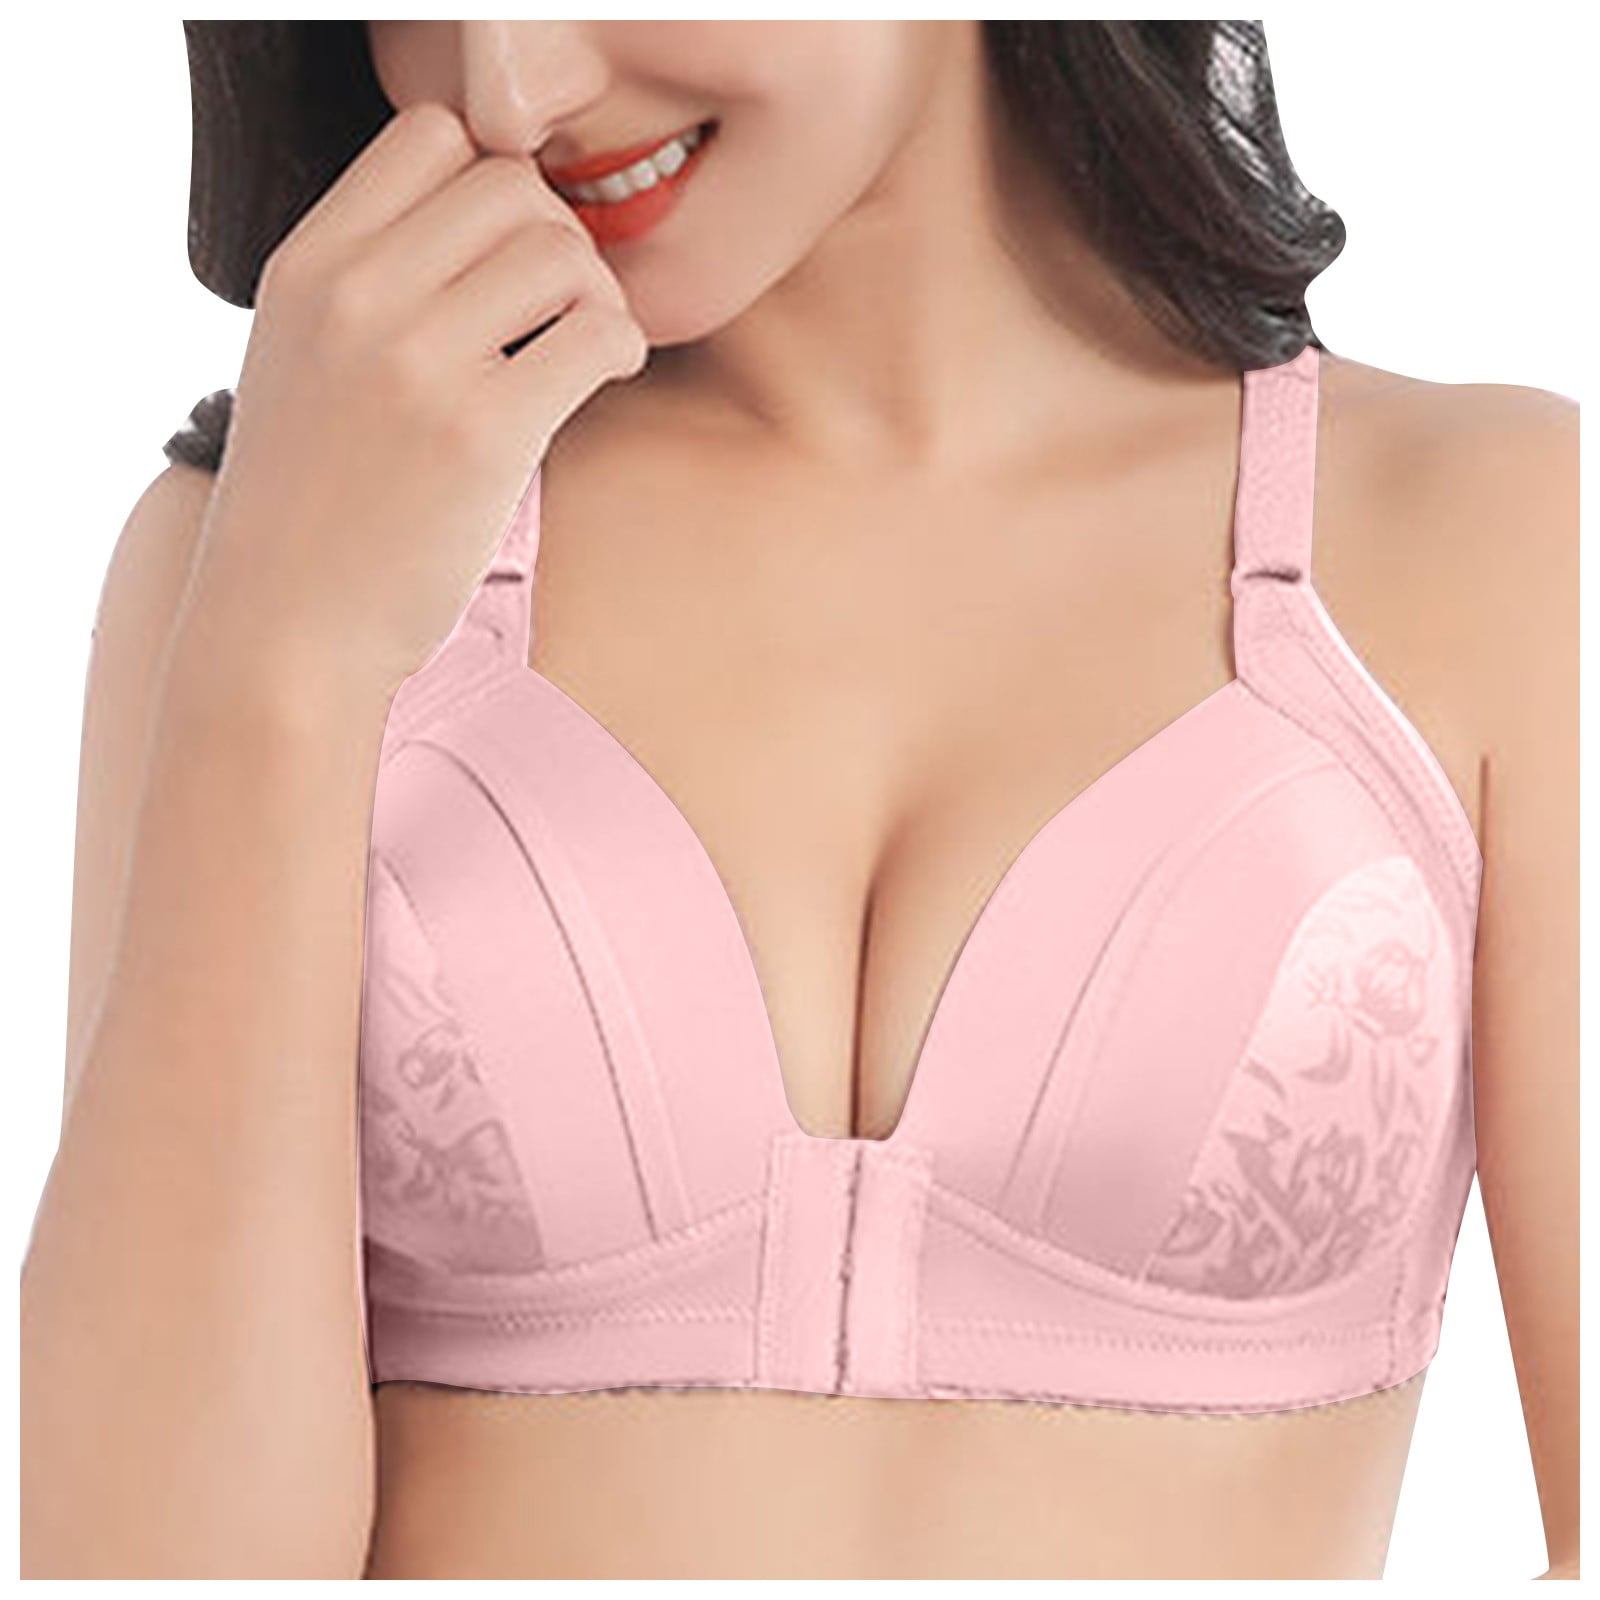 Mlqidk Women's Plus Size Bras Padded Bralette Underwire Sexy Push Up  Bra,Pink 44